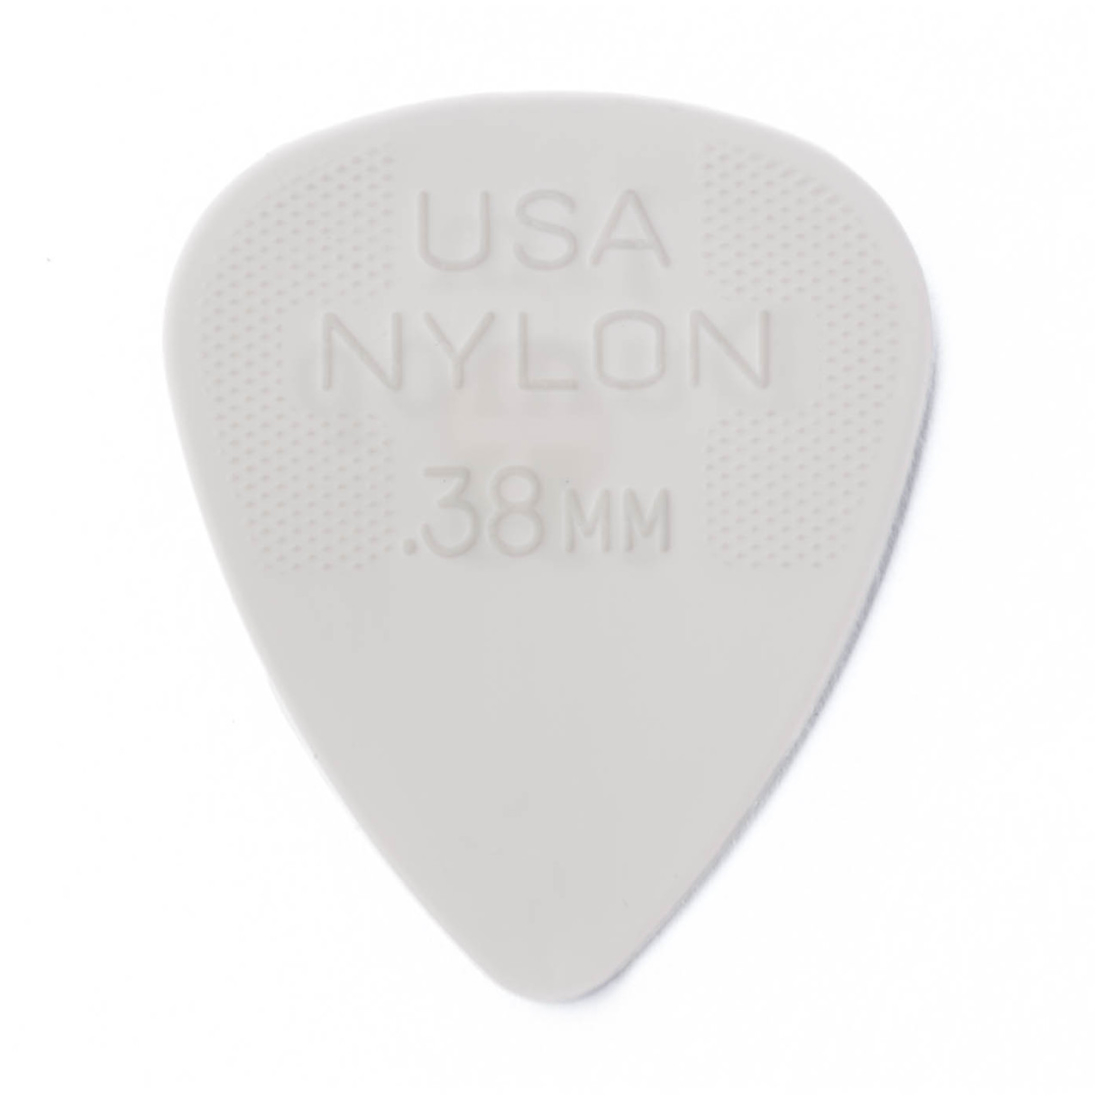 Nylon Standard Player Pack (72 Pack) - .38mm